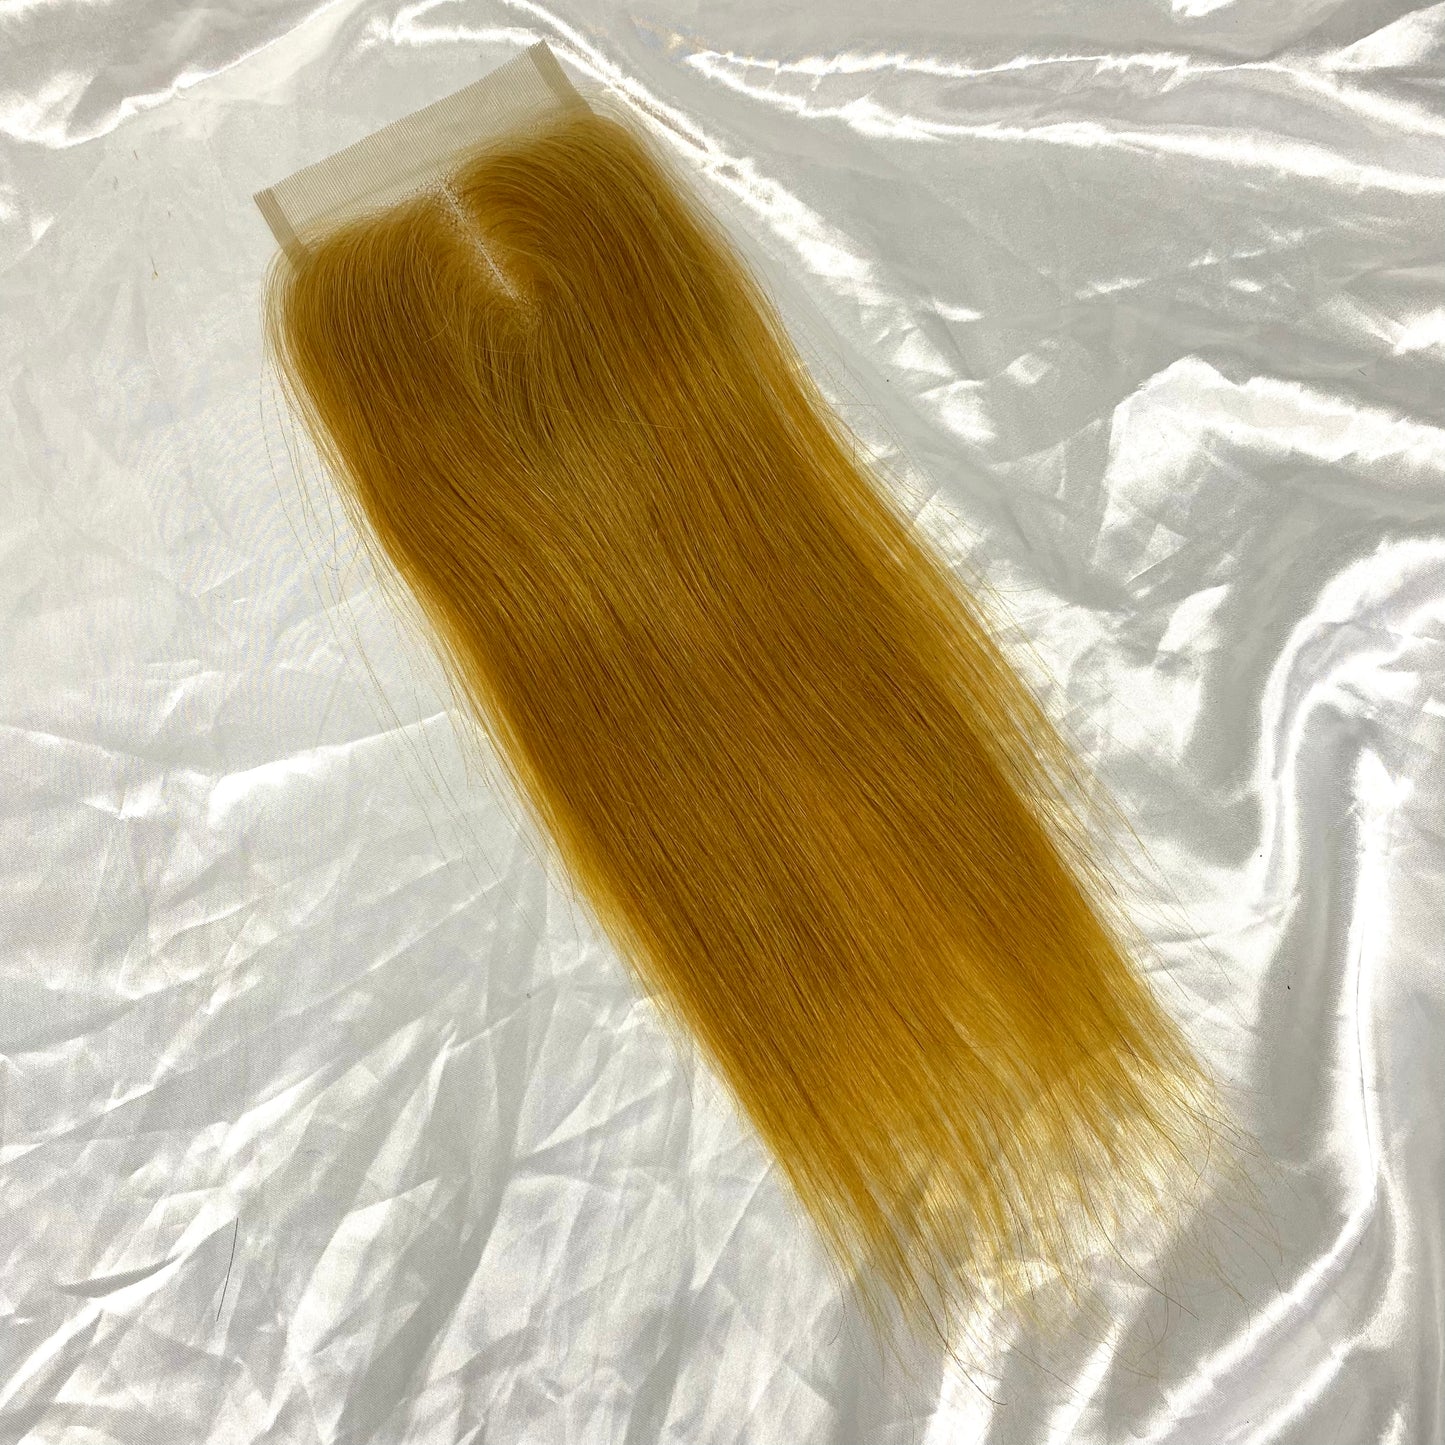 Fumi - Super Double Drawn Straight Hair 4x4 Lace Closure